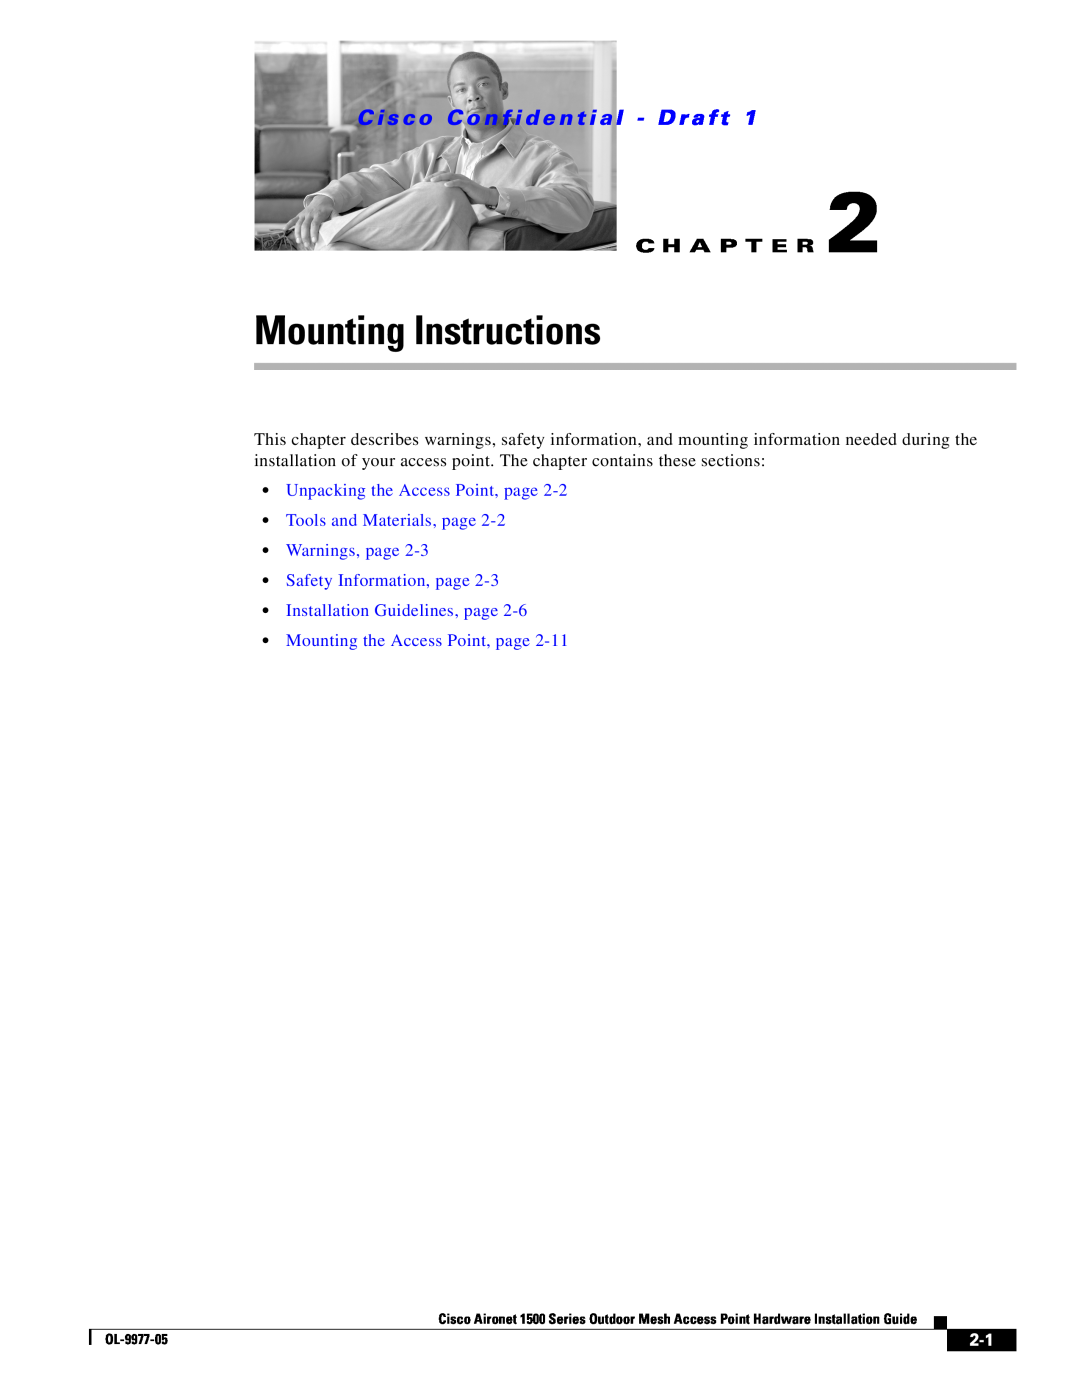 Cisco Systems 1500 Series manual C i s c o C o n f i d e n t i a l - D r a ft, Mounting the Access Point, page, OL-9977-05 